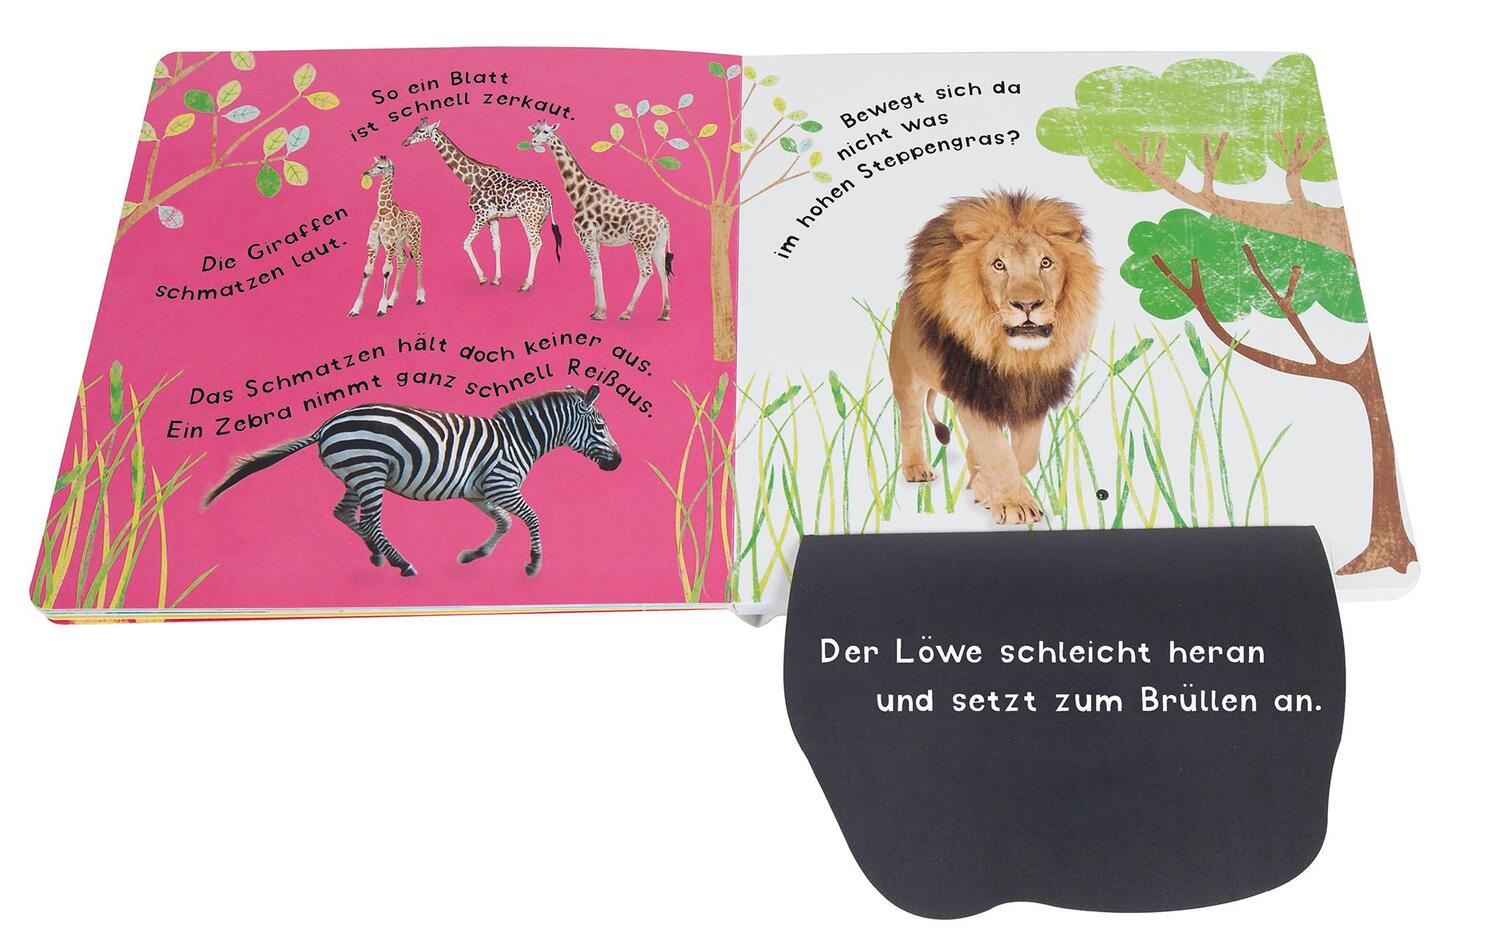 Bild: 9783831028603 | Klang-Klappenbuch. Tiere | Buch | Klang-Klappenbuch | 12 S. | Deutsch